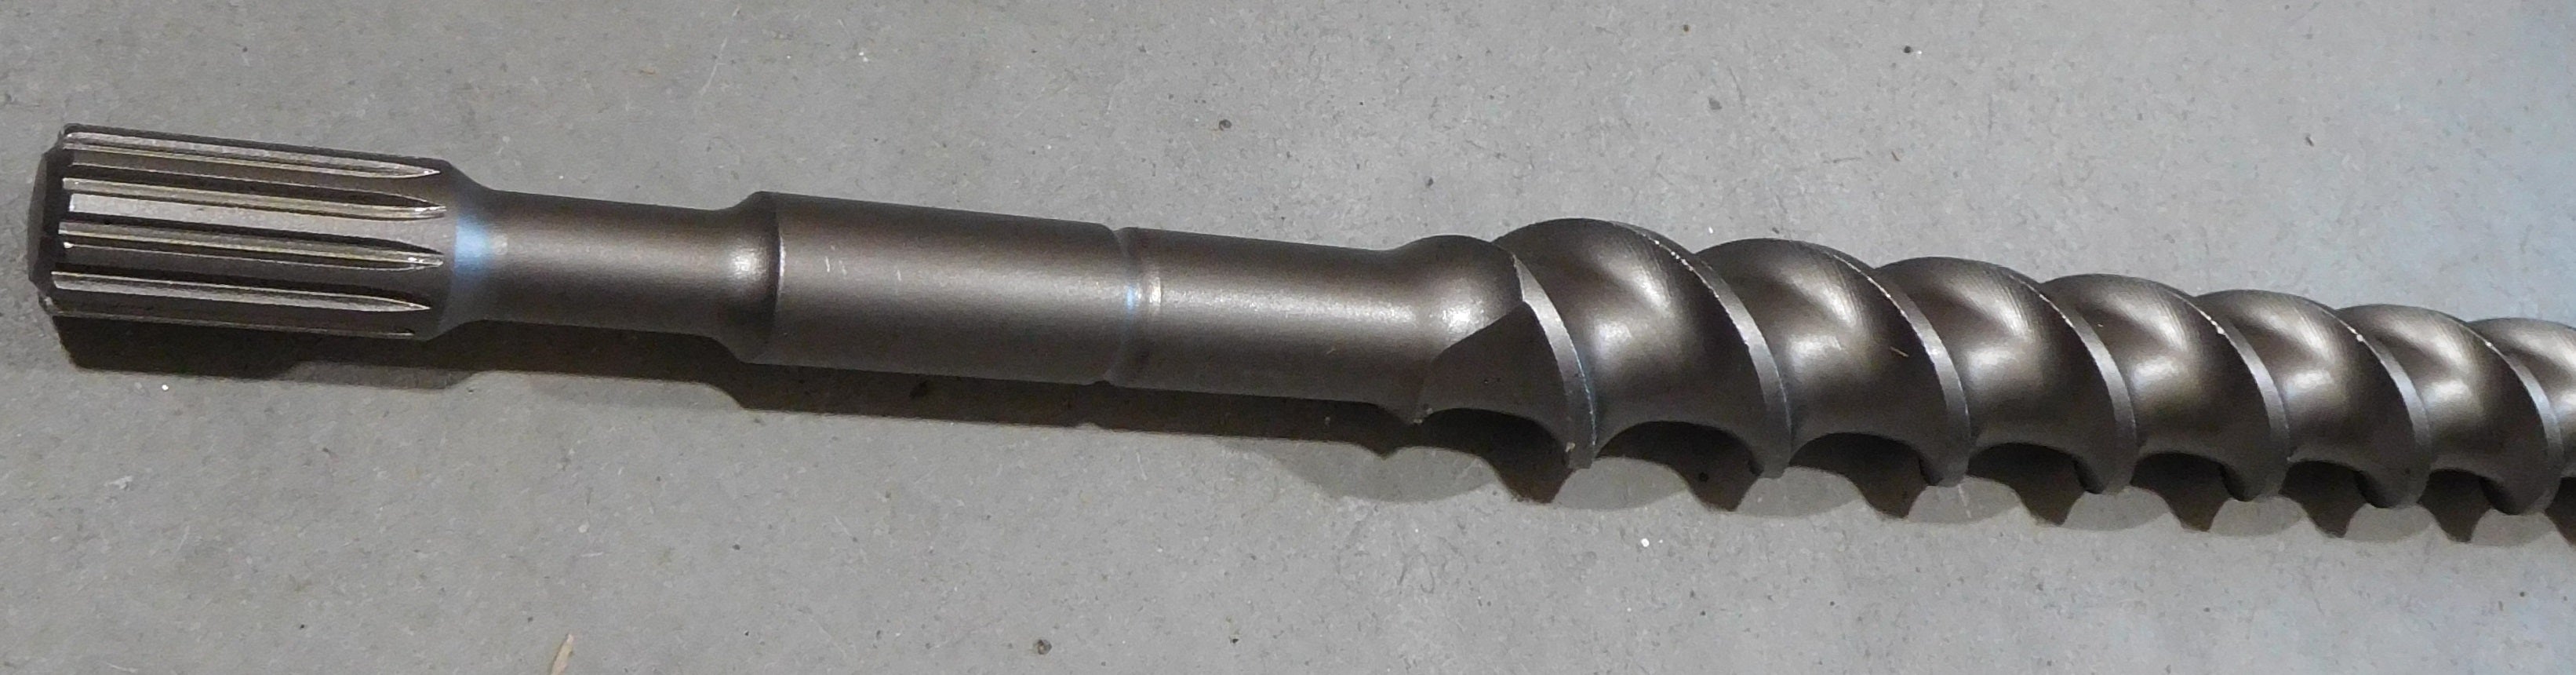 Bosch 233698 1-3/8" x 31" x 37 Spline Shank Rotary Hammer Drill Bit Germany